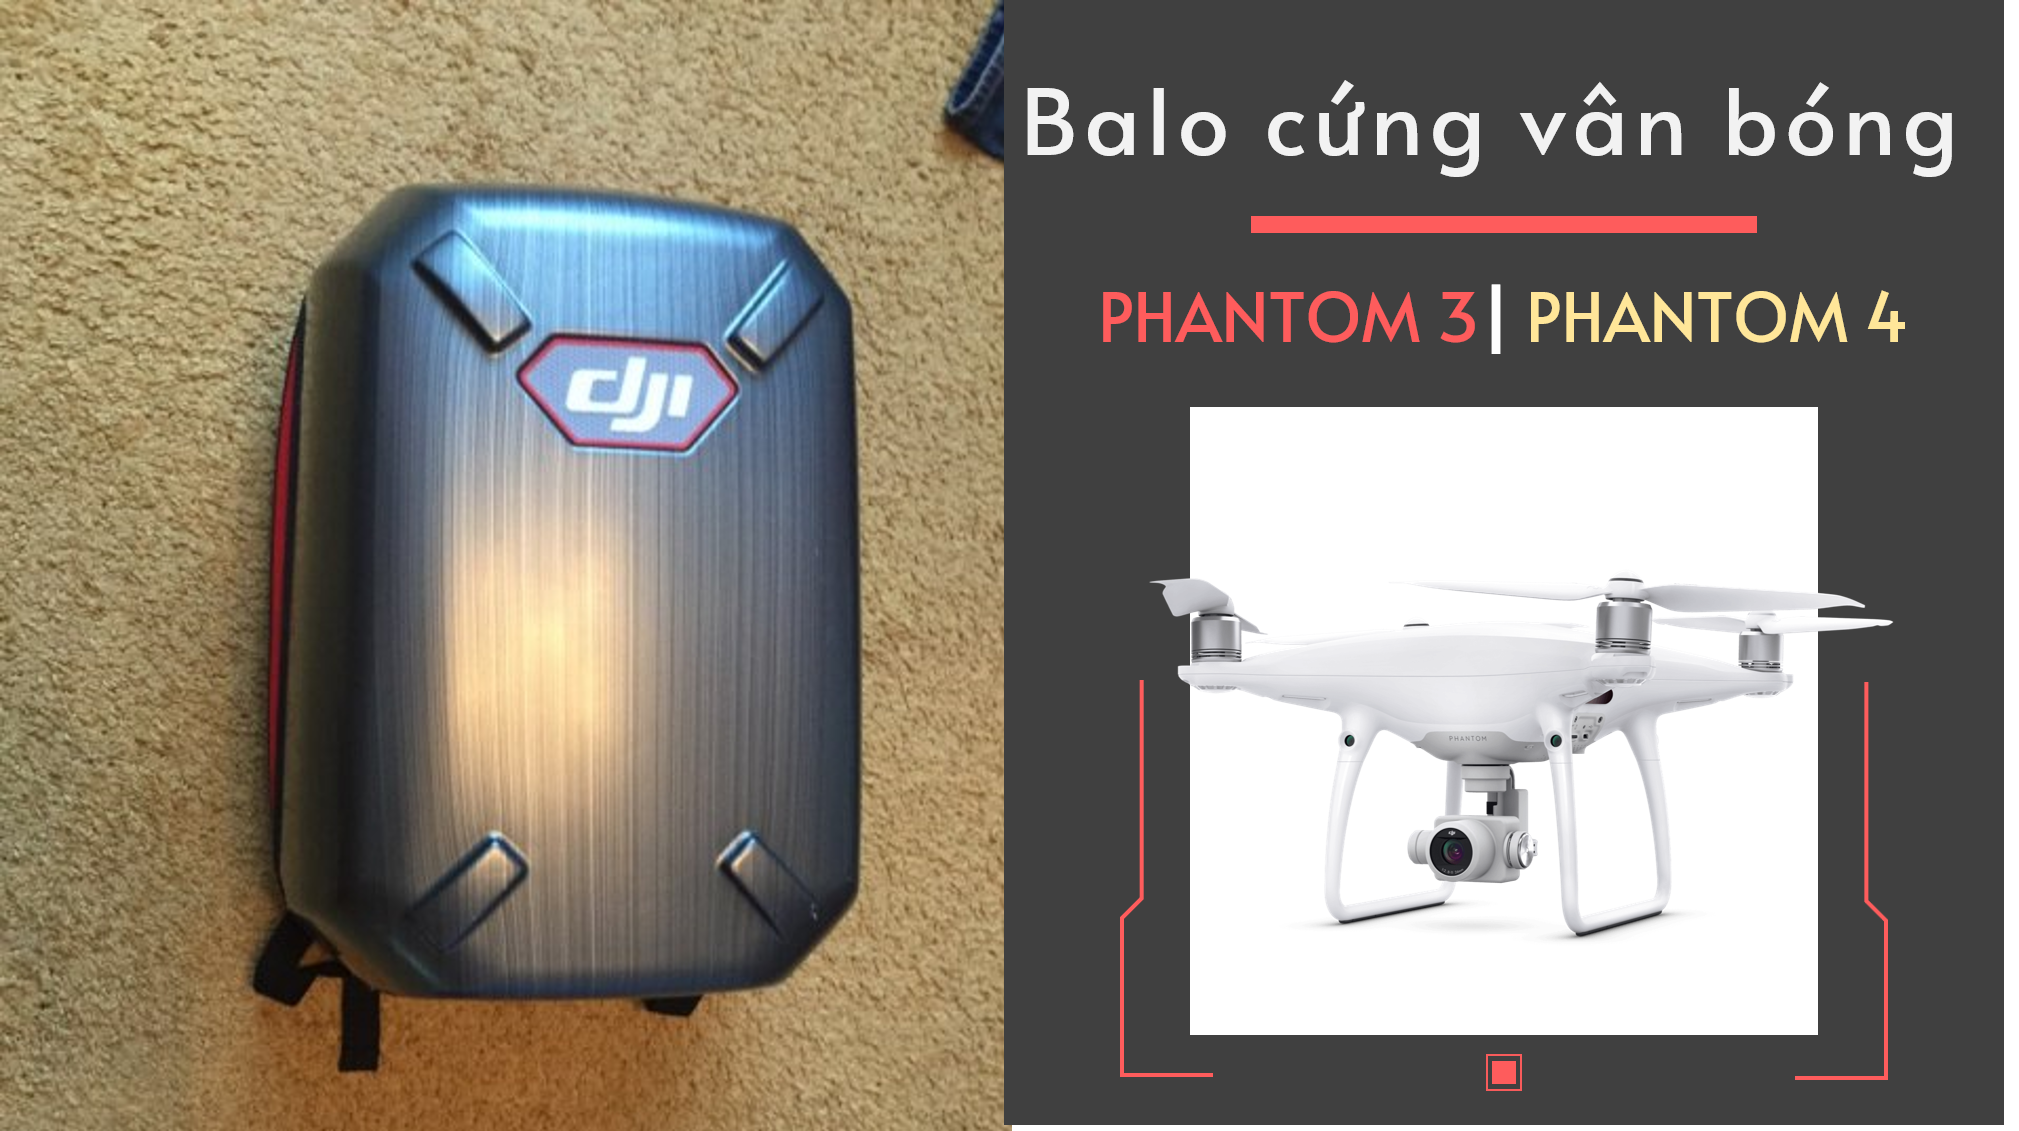 balo-cung-phantom-34-van-bong-dji